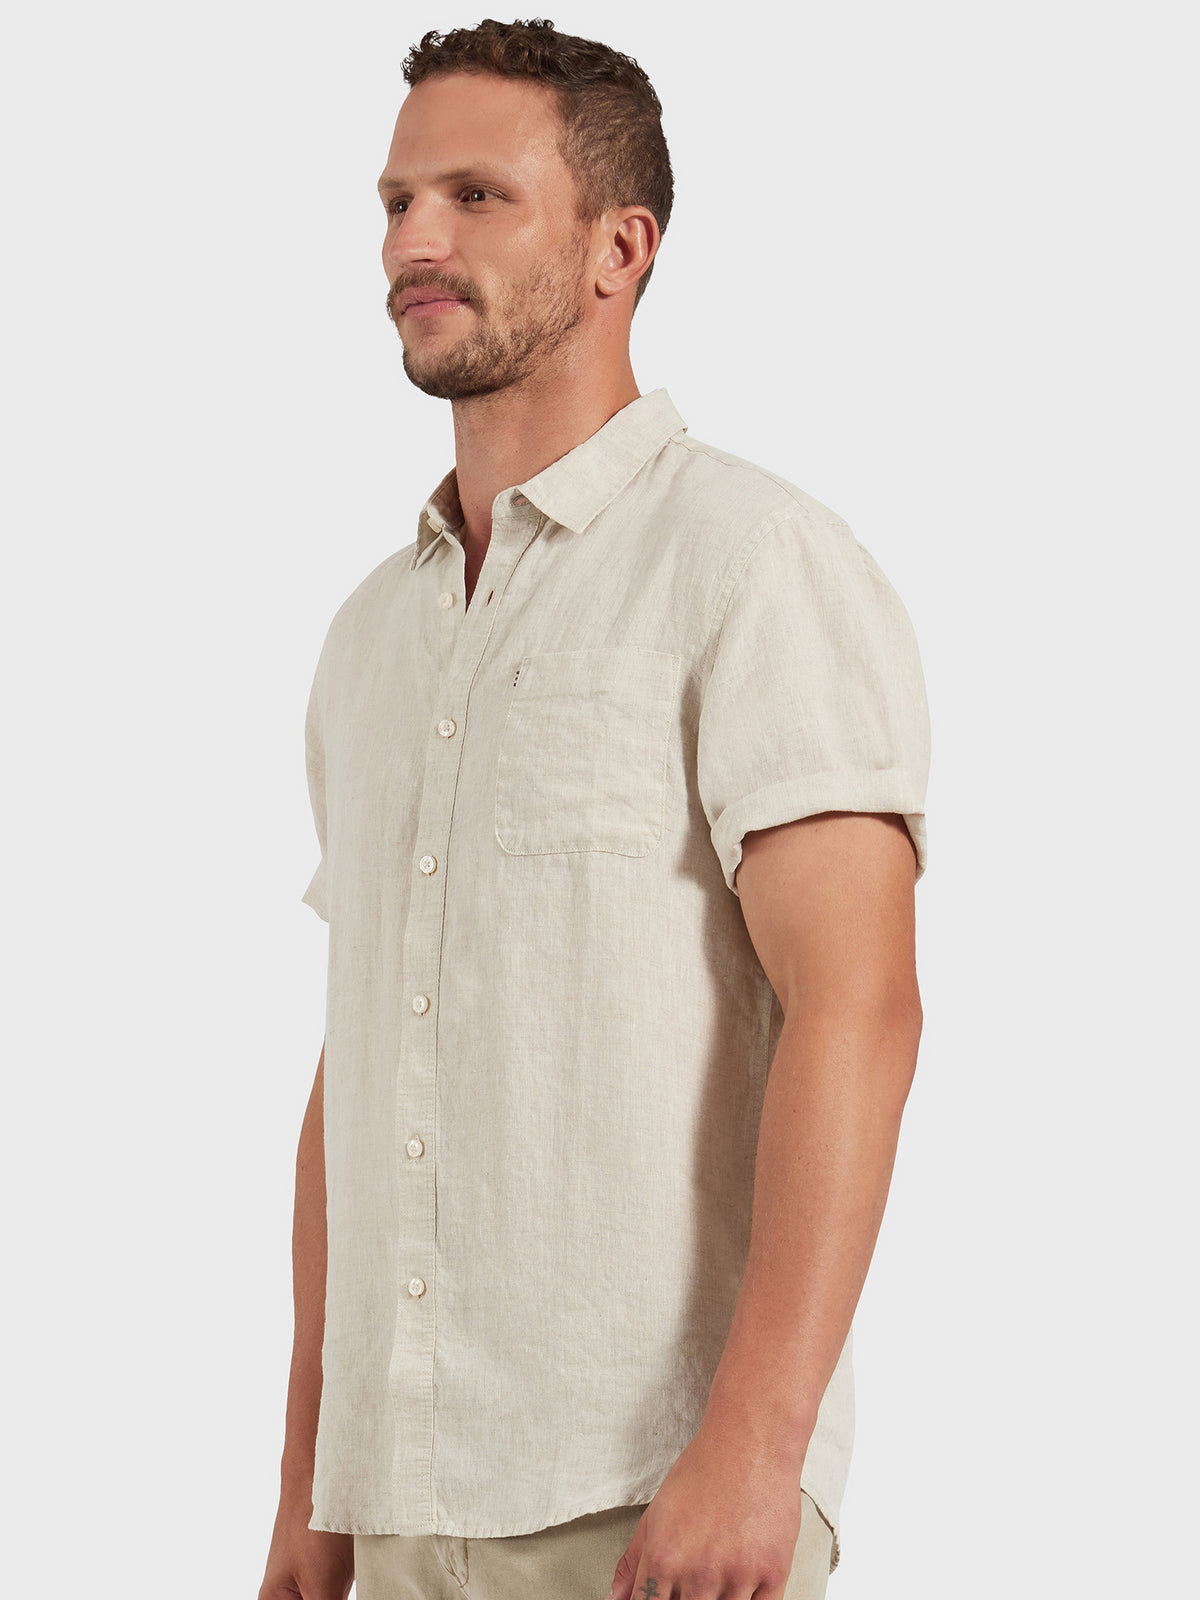 Hampton Linen Short Sleeve Shirt in Oatmeal